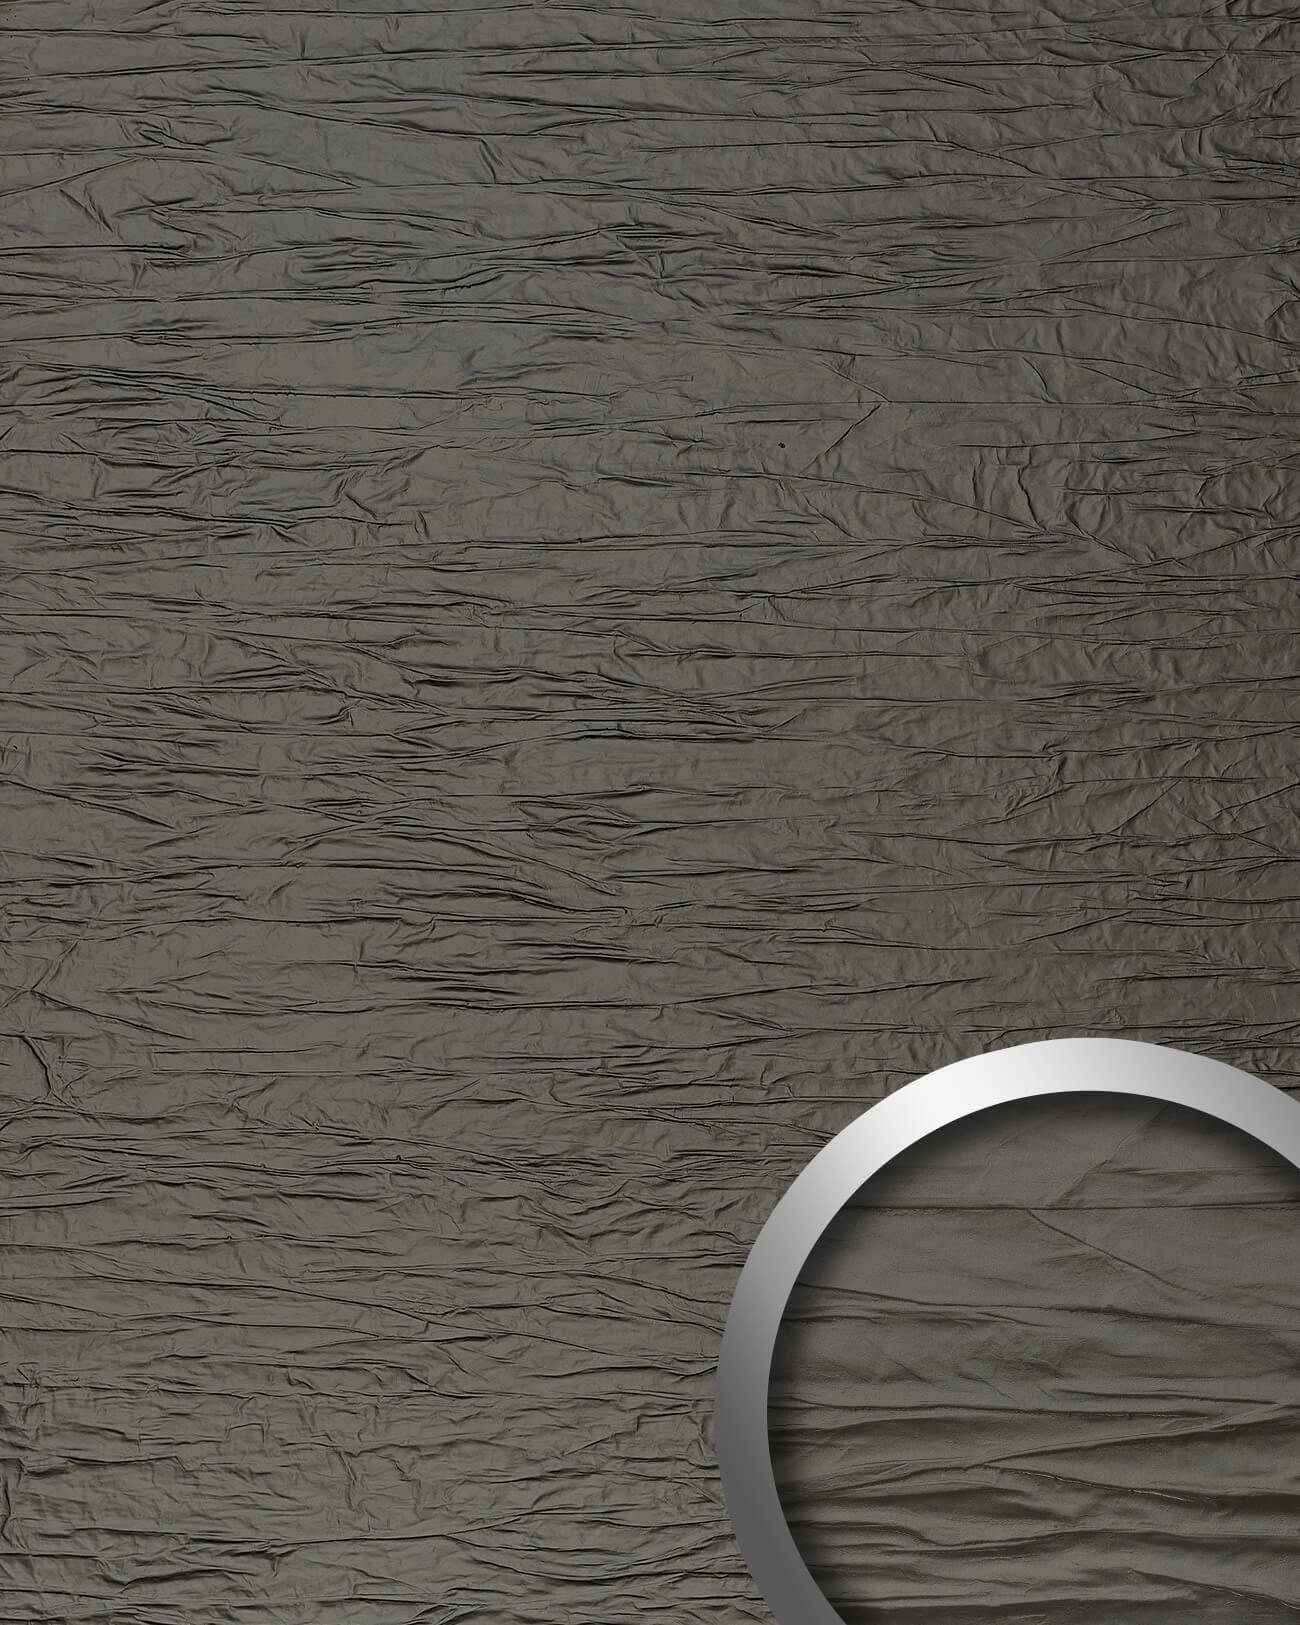 Wallface Wandpaneel 24940-SA, BxL: 100x260 cm, 2.6 qm, (Dekorpaneel, Wandverkleidung in 3D Crushoptik) selbstklebend, grau, strukturiert